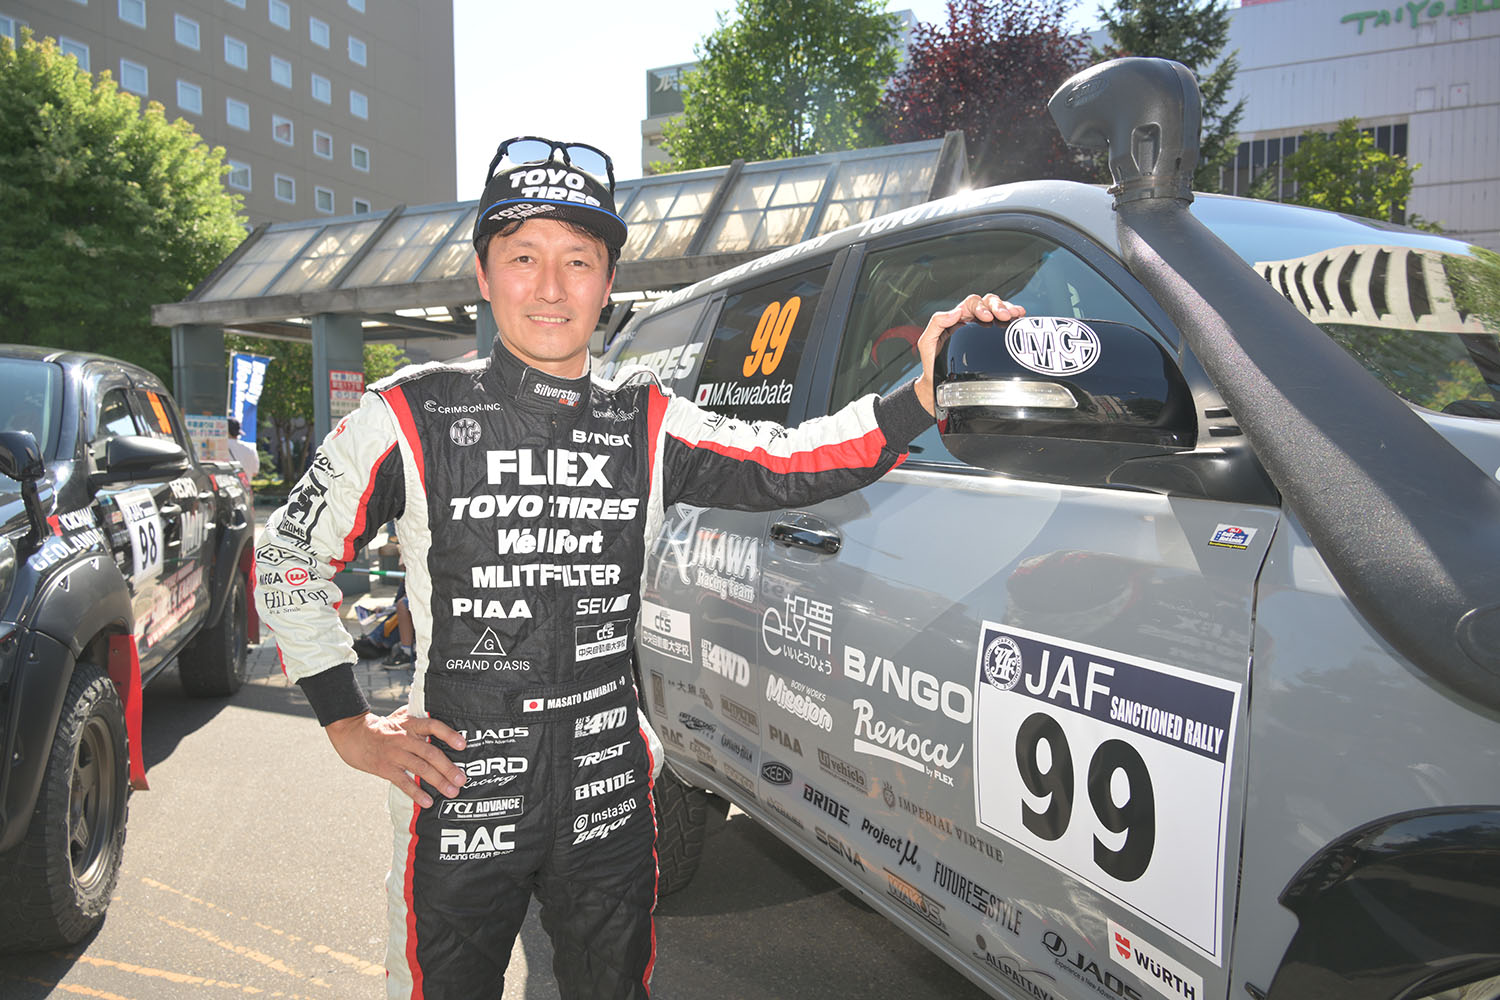 FLEX SHOWAIKAWA Racing with TOYO TIRESの川畑選手の写真 〜 画像9